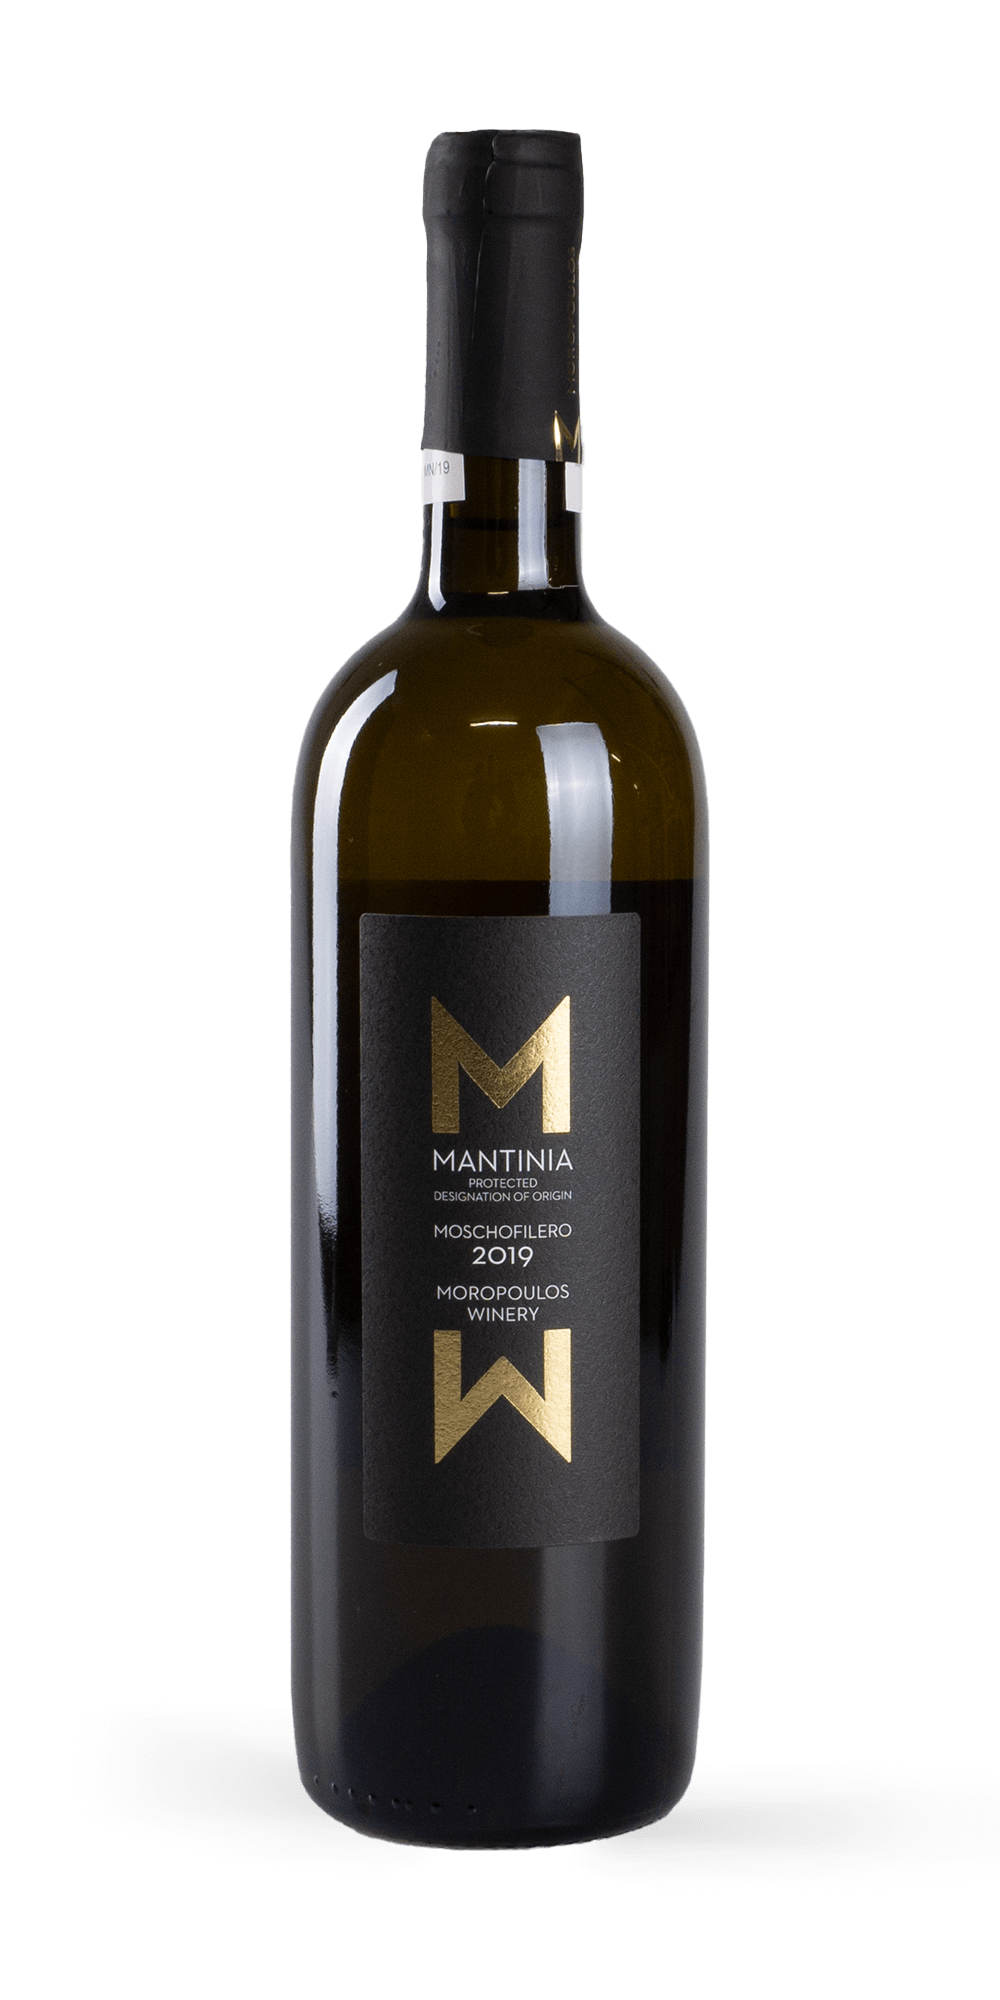 aus 2021 Moropoulos trockener Peloponnes Winery Weißwein Mantinia -